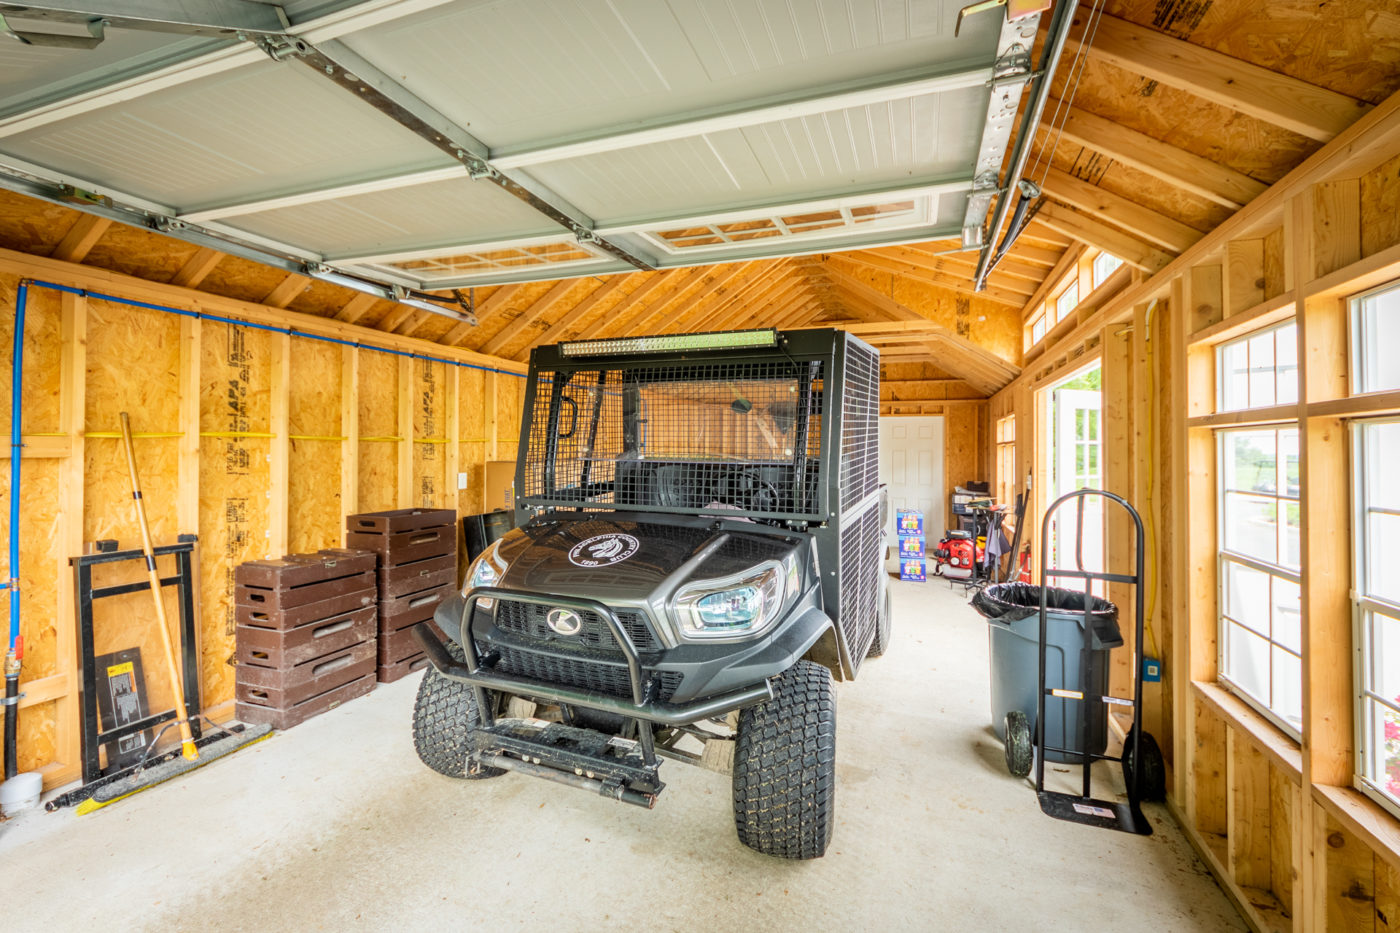 A single-car garage workshop storing an ATV